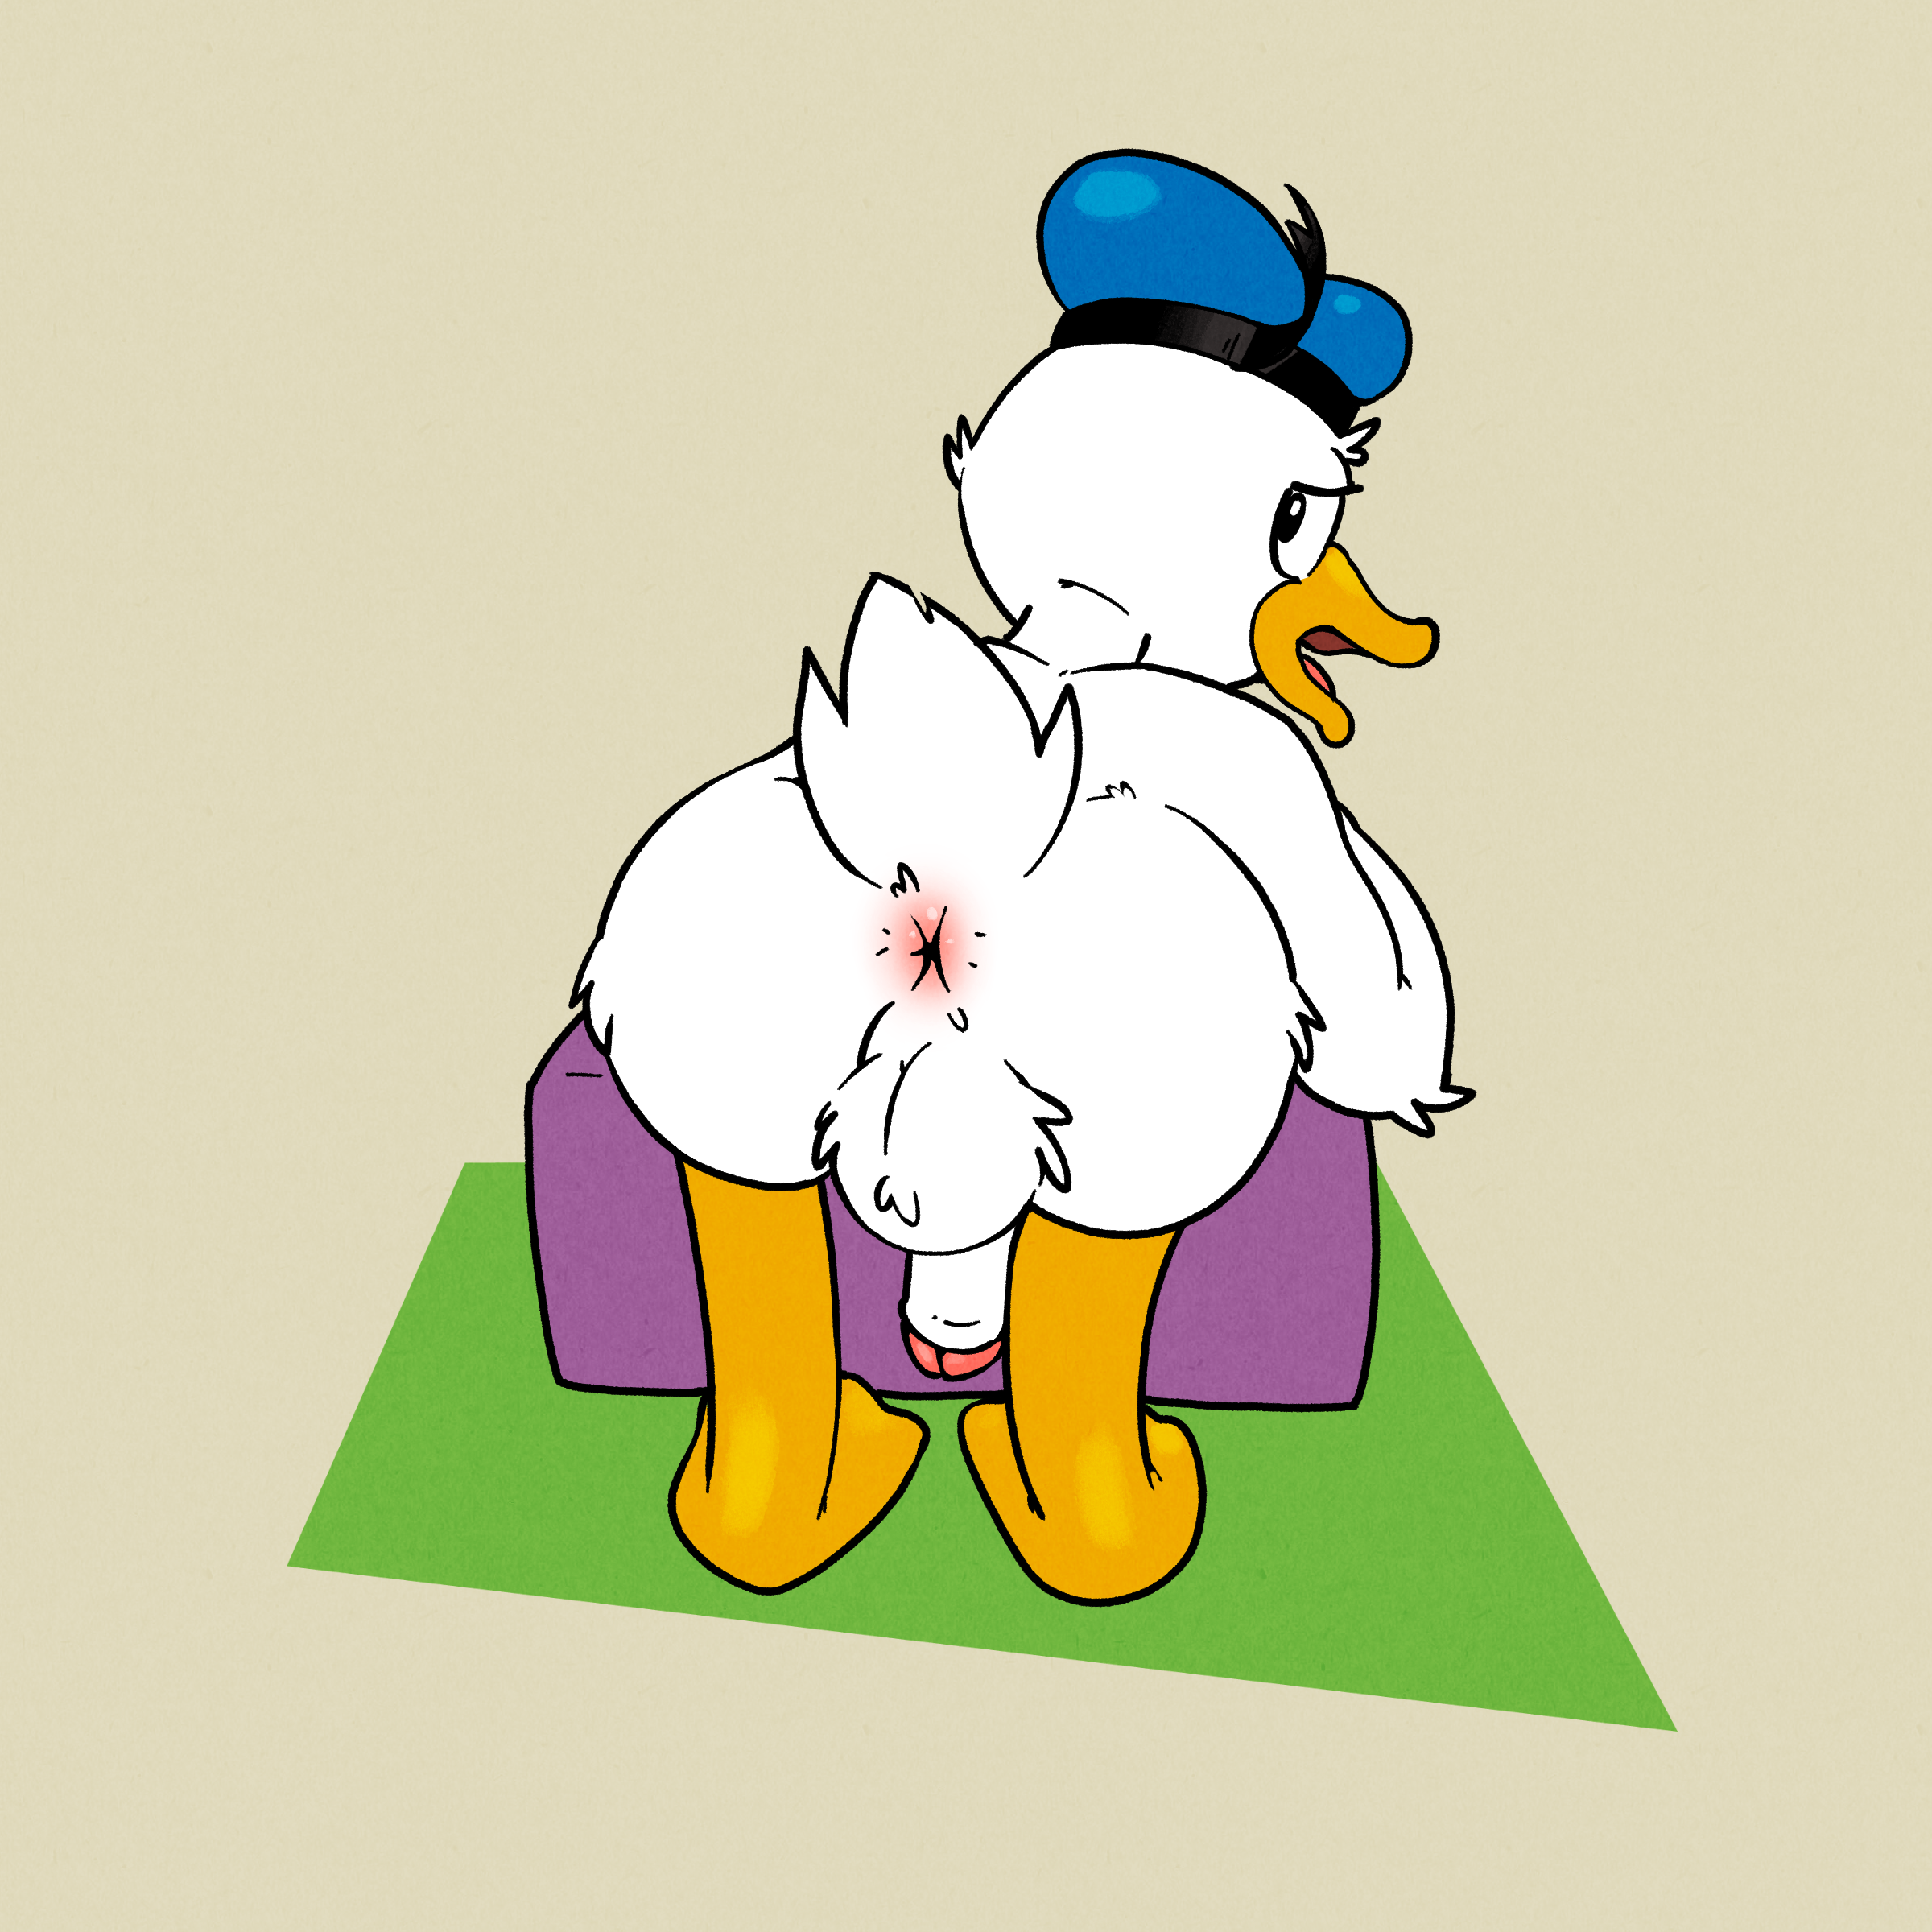 Donald duck getting a blowjob